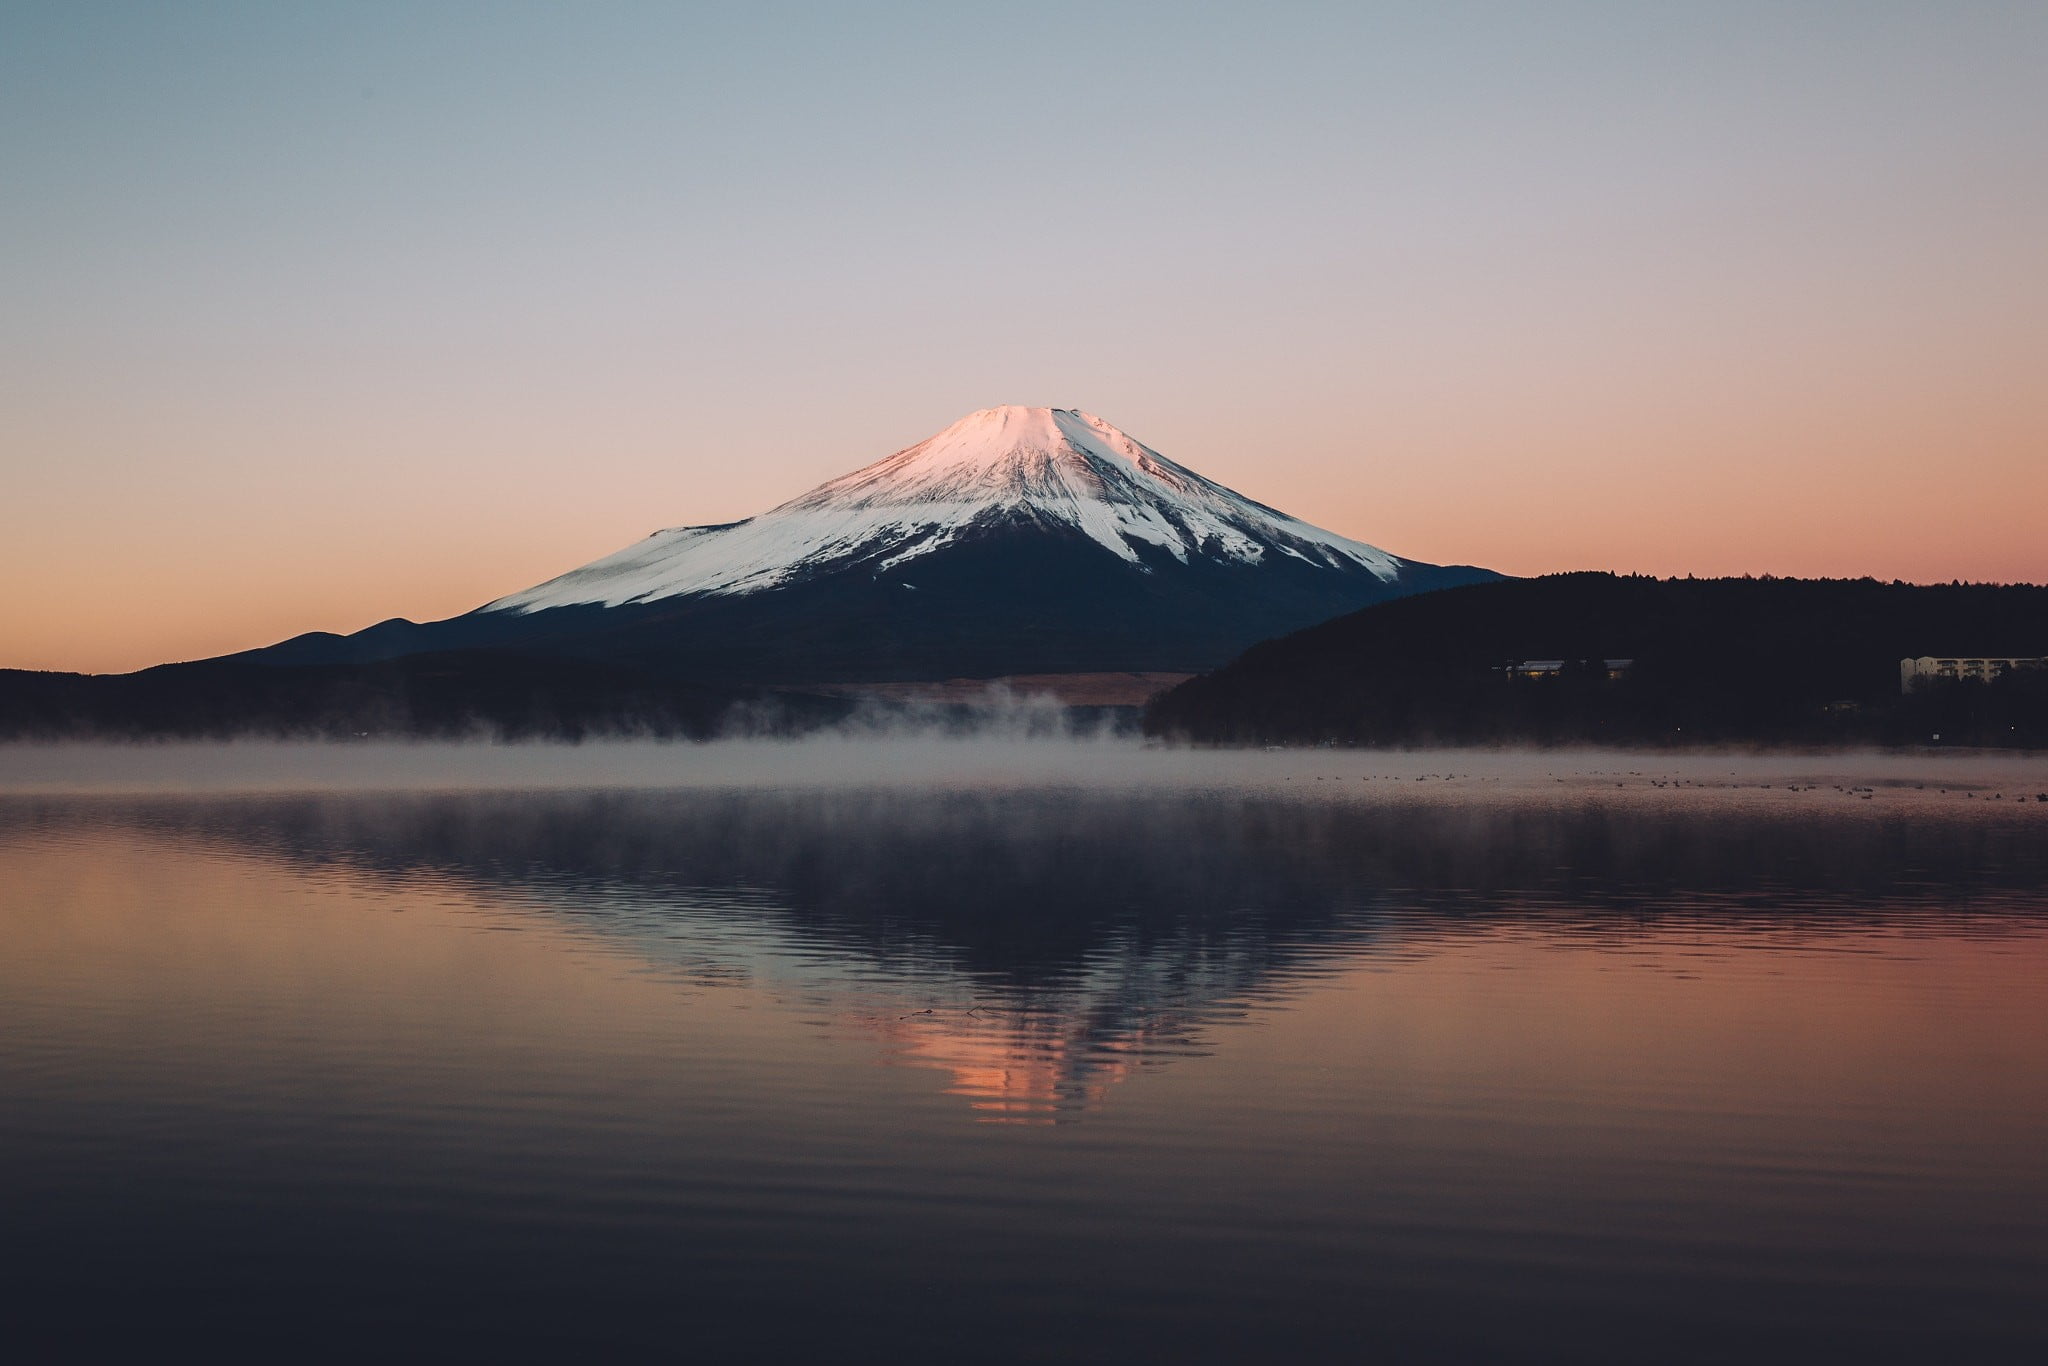 snow capped mountain, Mount Fuji, Japan, nature